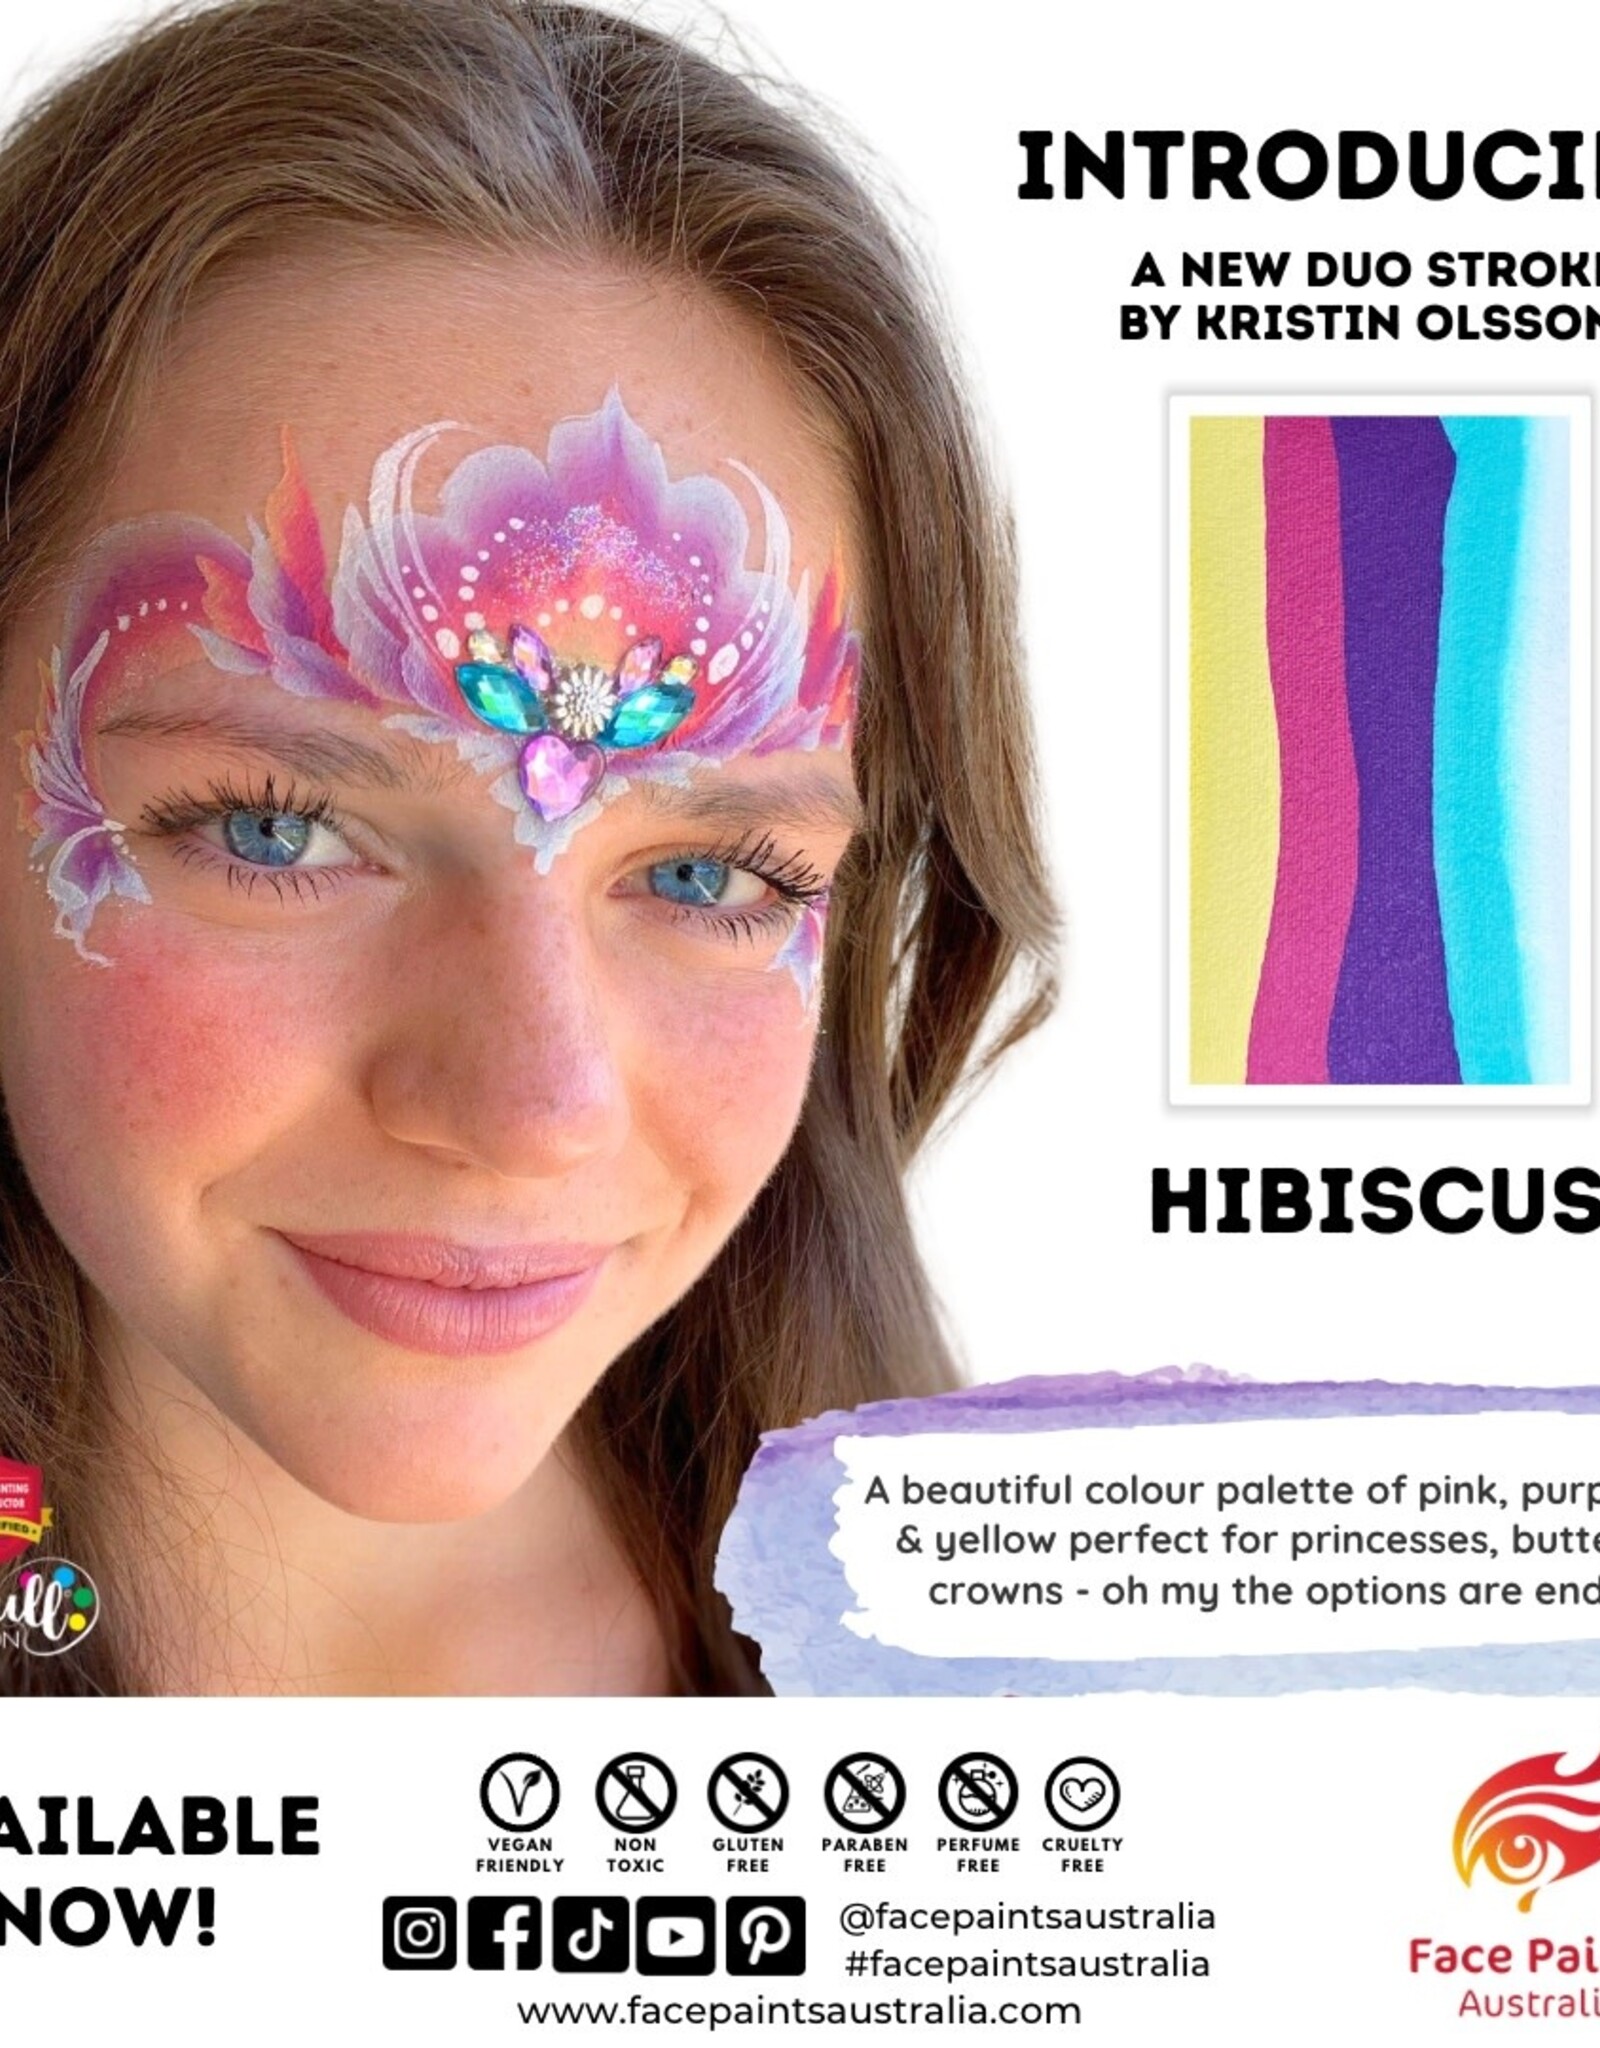 Face Paints Australia Hibiscus Brush combo  FPA - 28g - Kristin Olsson collection